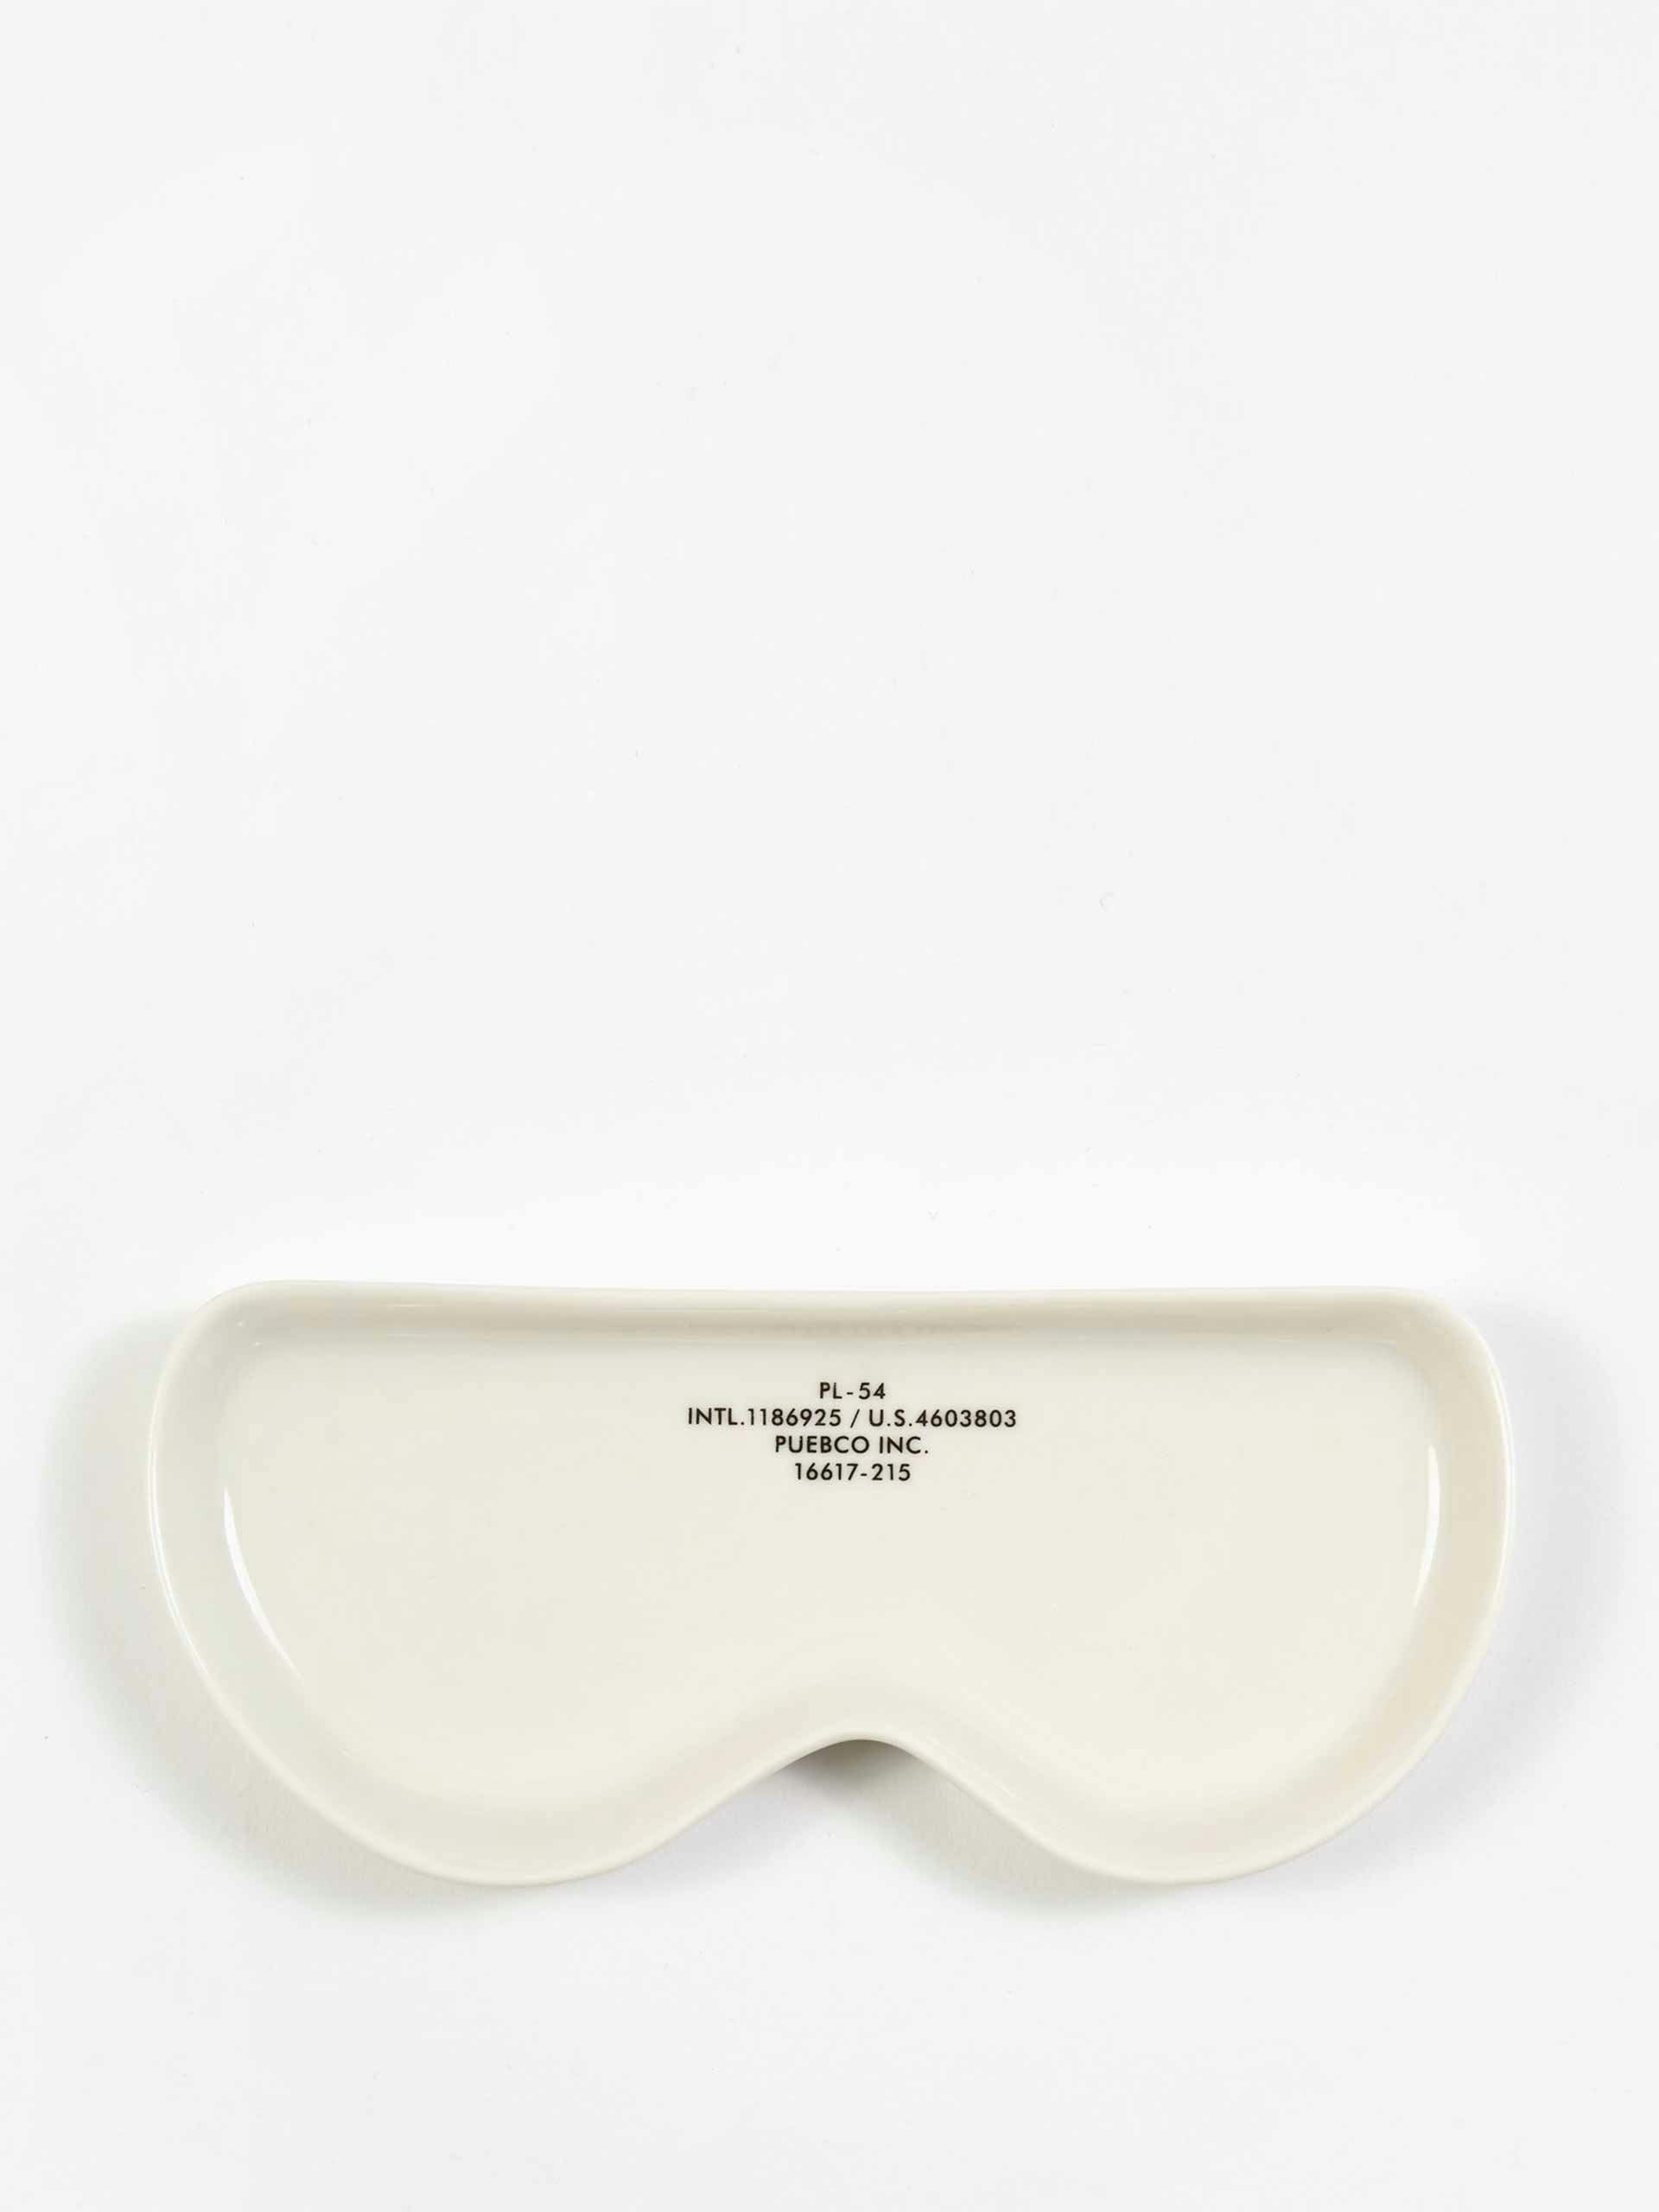 Glasses tray